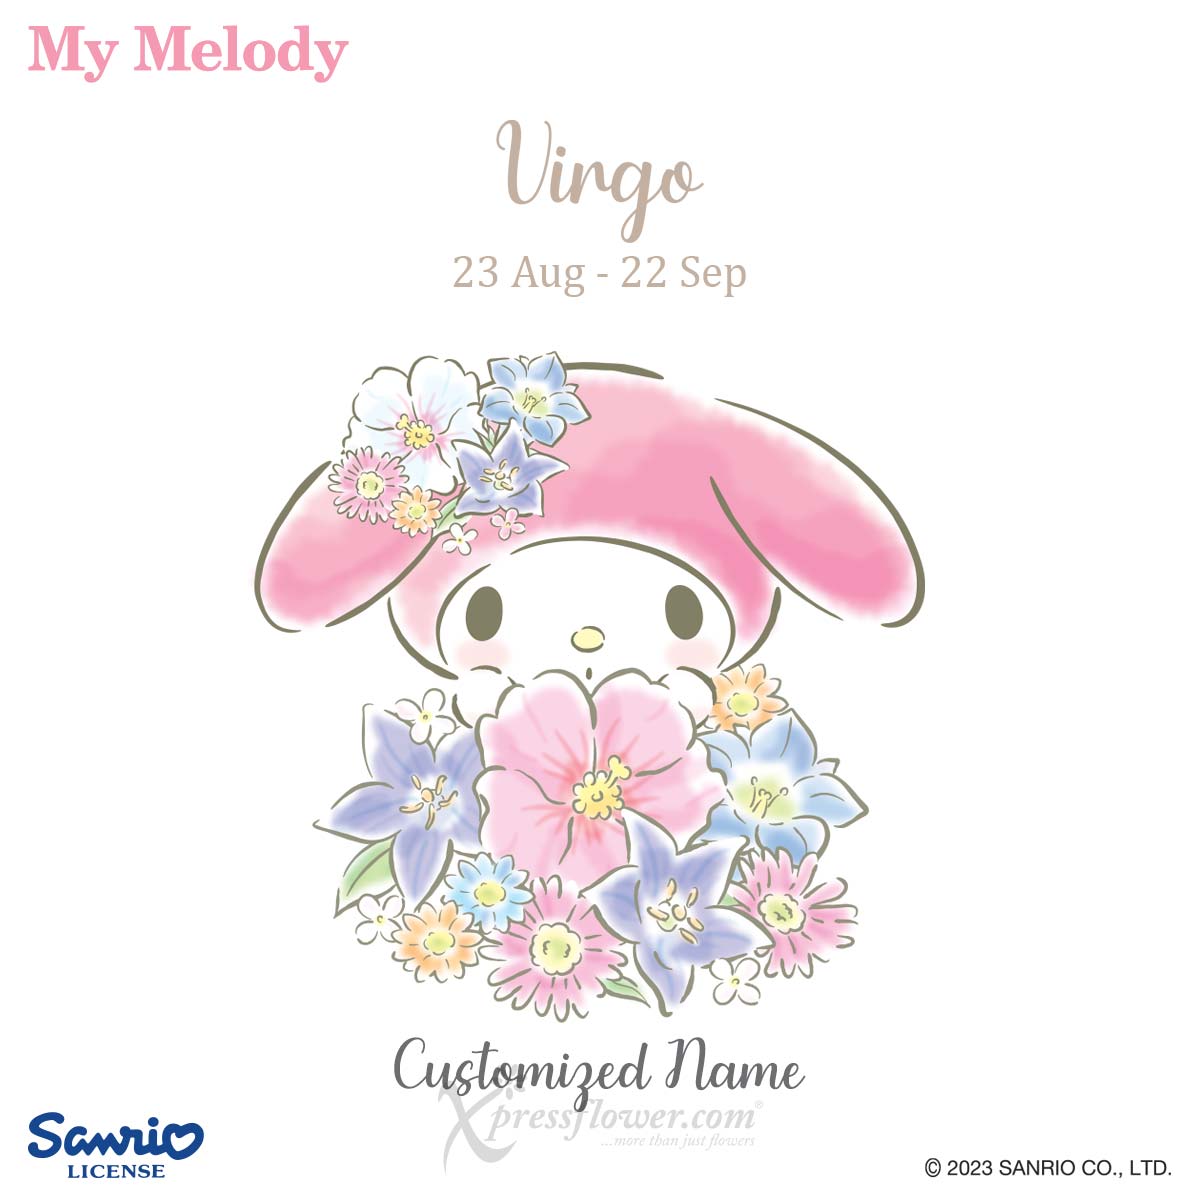 SNMG2305 Viva La Virgo (6 2toned Pink Roses with My Melody Personalised Mug - Virgo) 1c